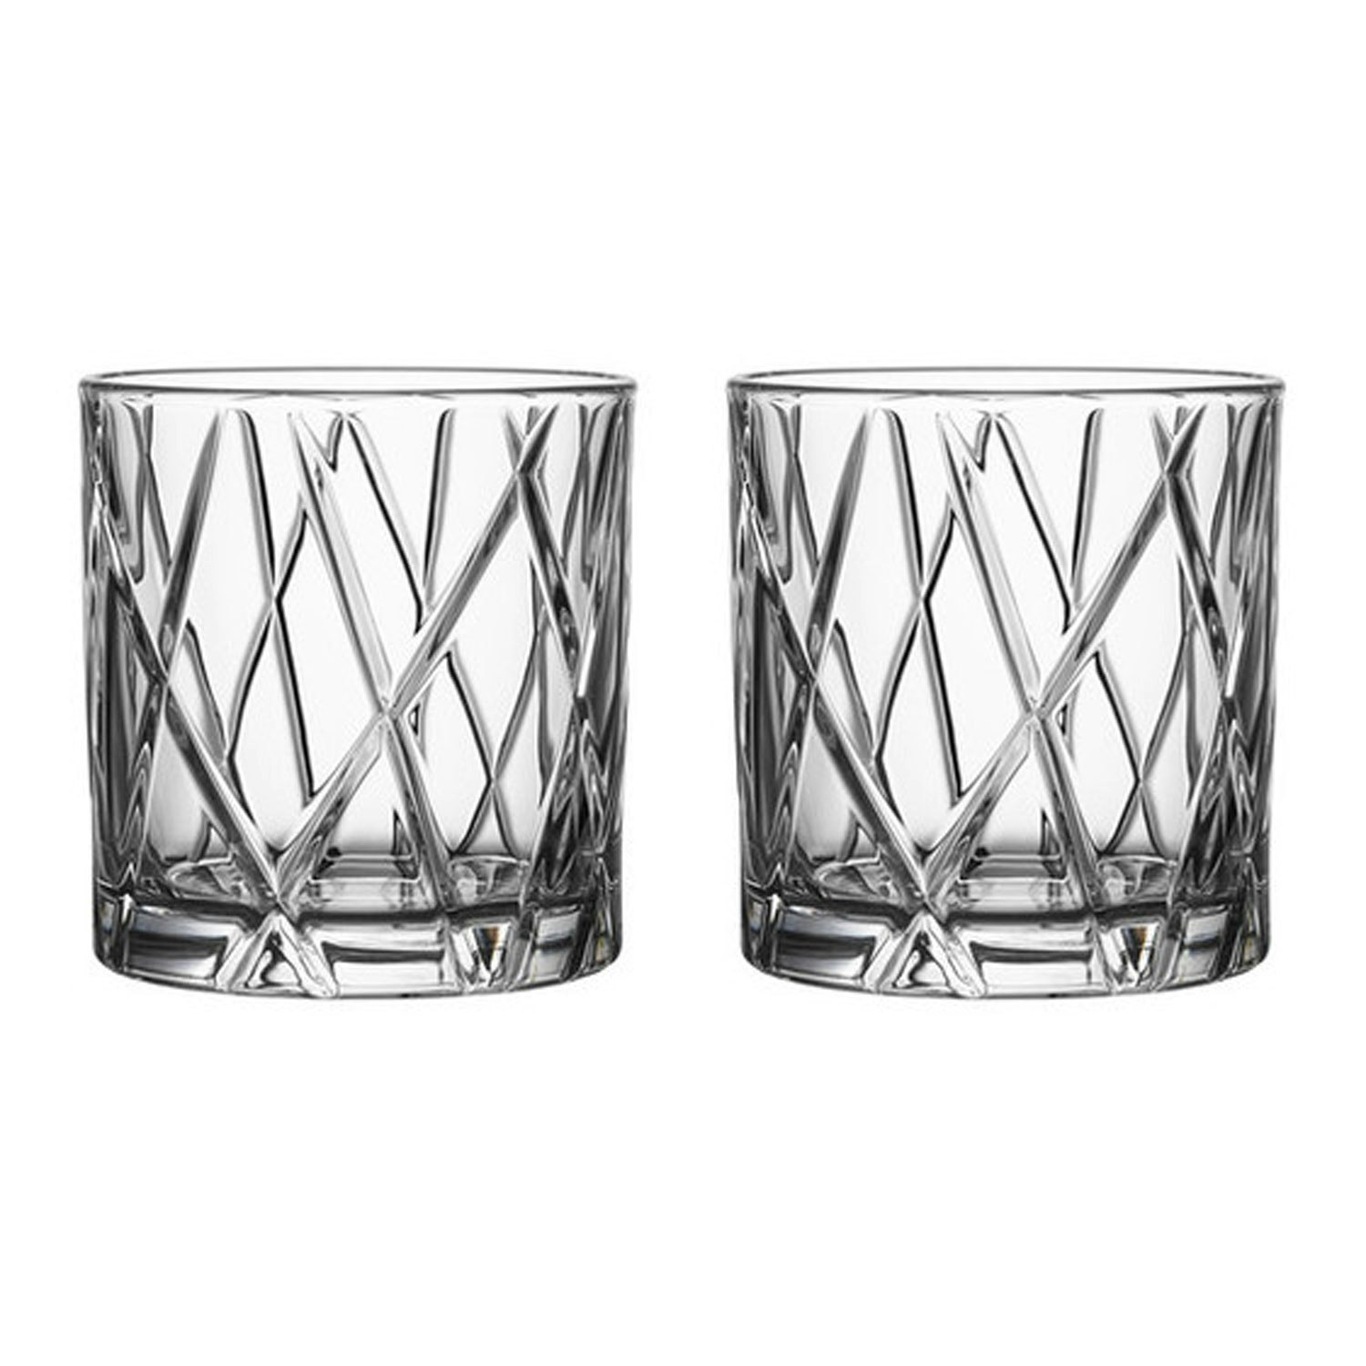 https://royaldesign.com/image/2/orrefors-city-whiskey-glass-dof-34-cl-2-pcs-0?w=800&quality=80